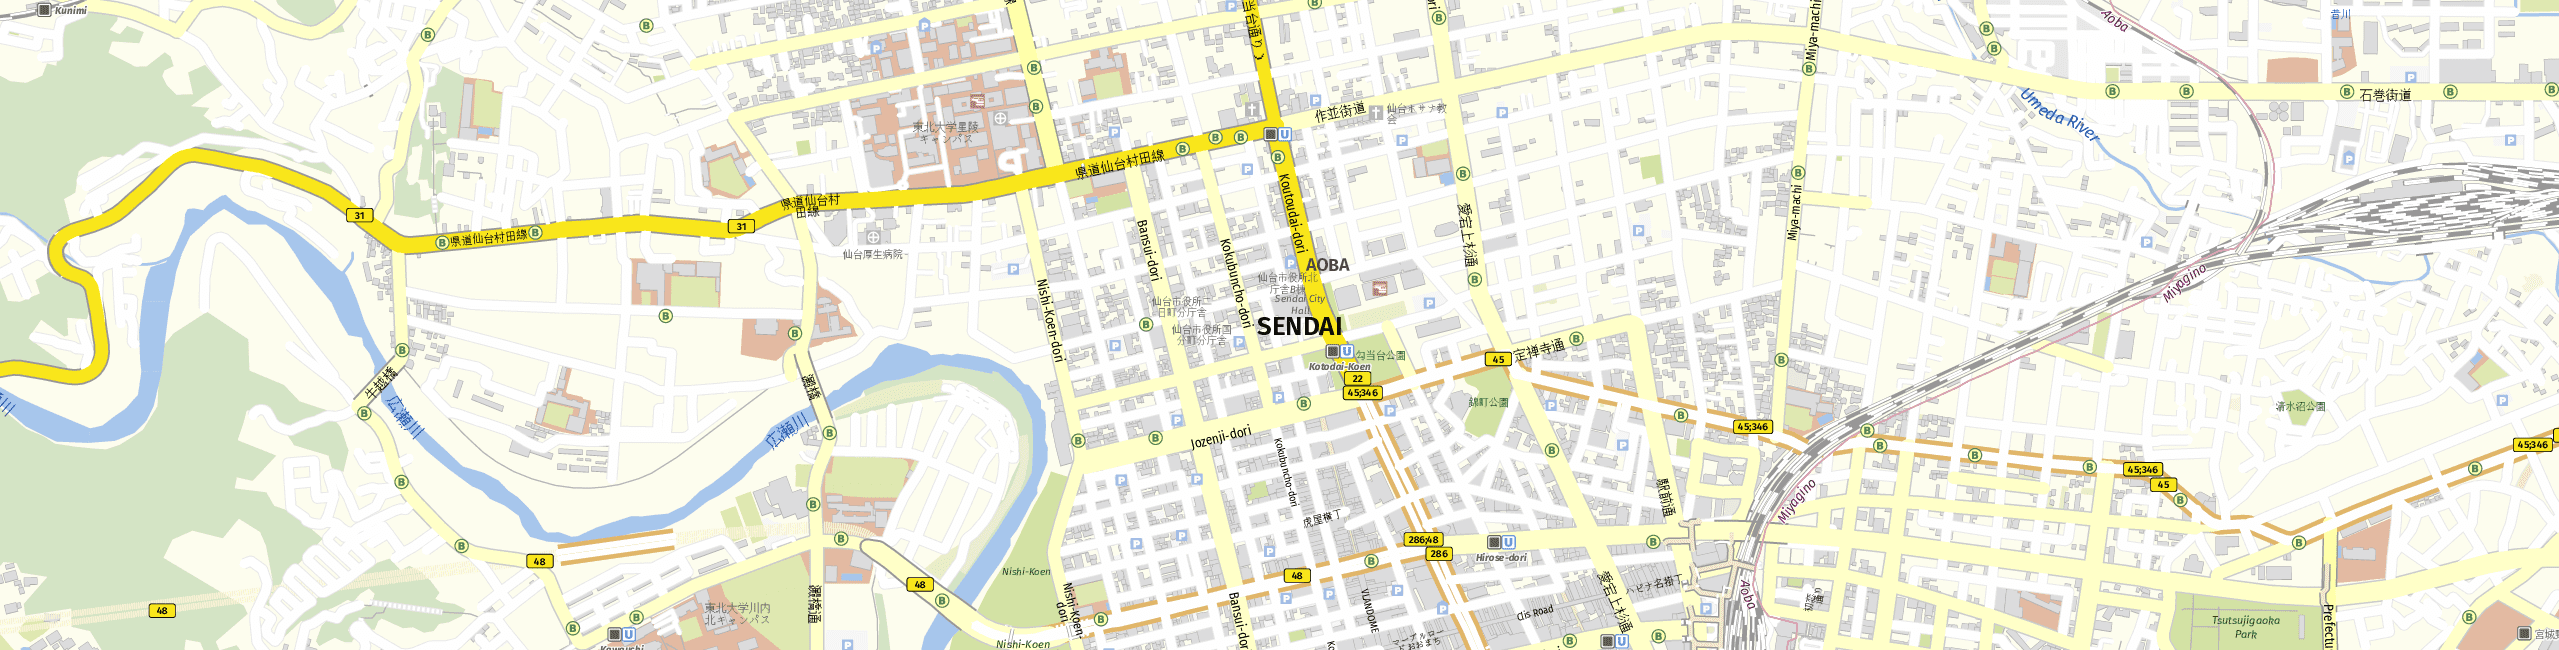 Stadtplan Sendai zum Downloaden.